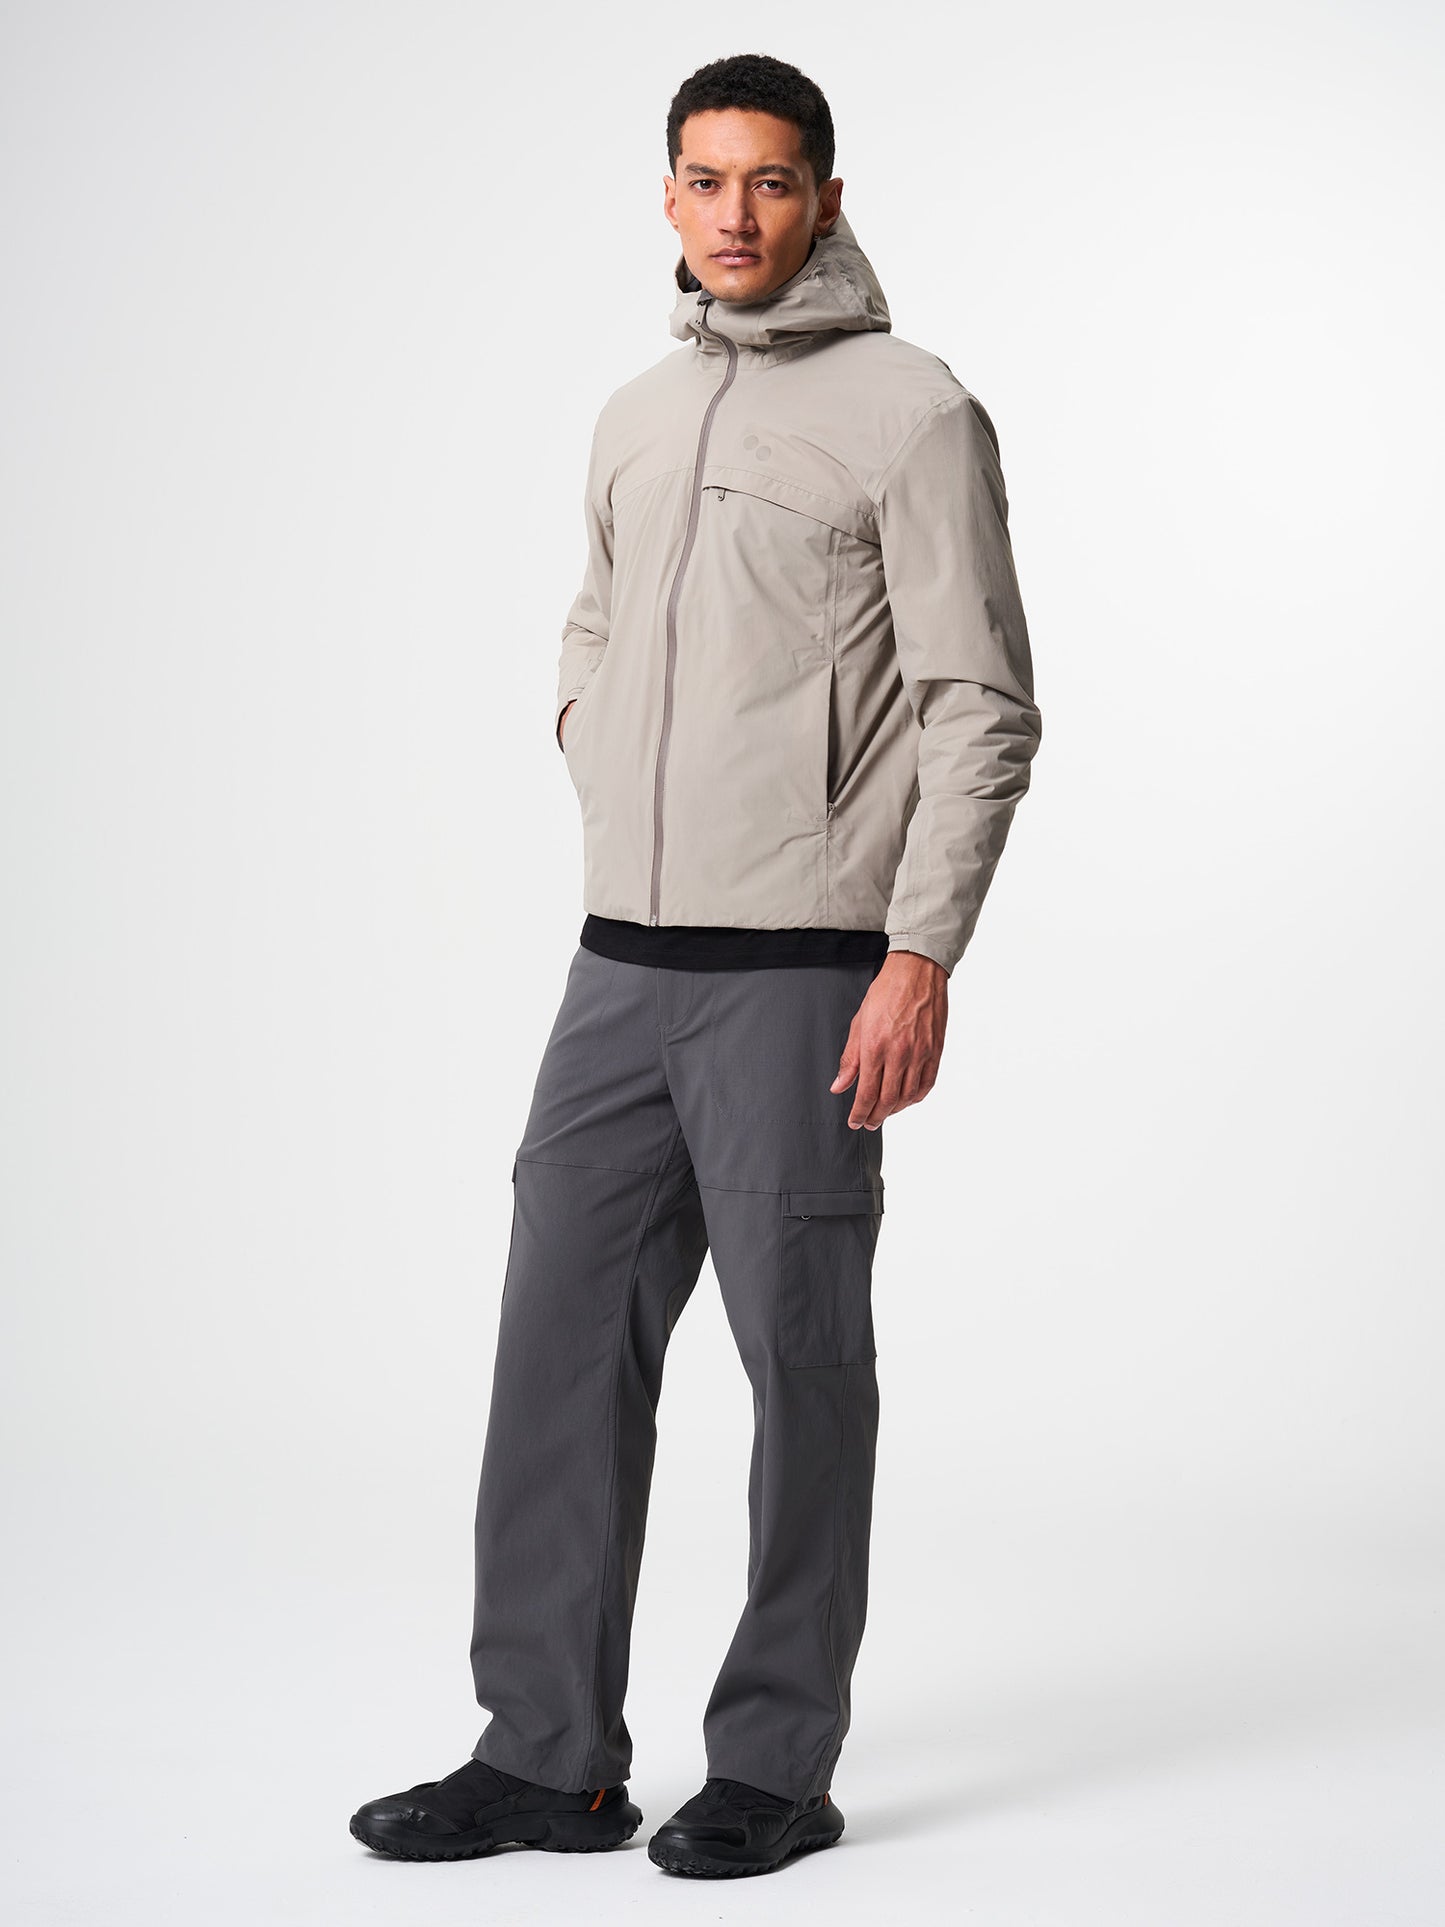 pinqponq-Hoodie-Jacket-Men-Cement-Taupe-model-front